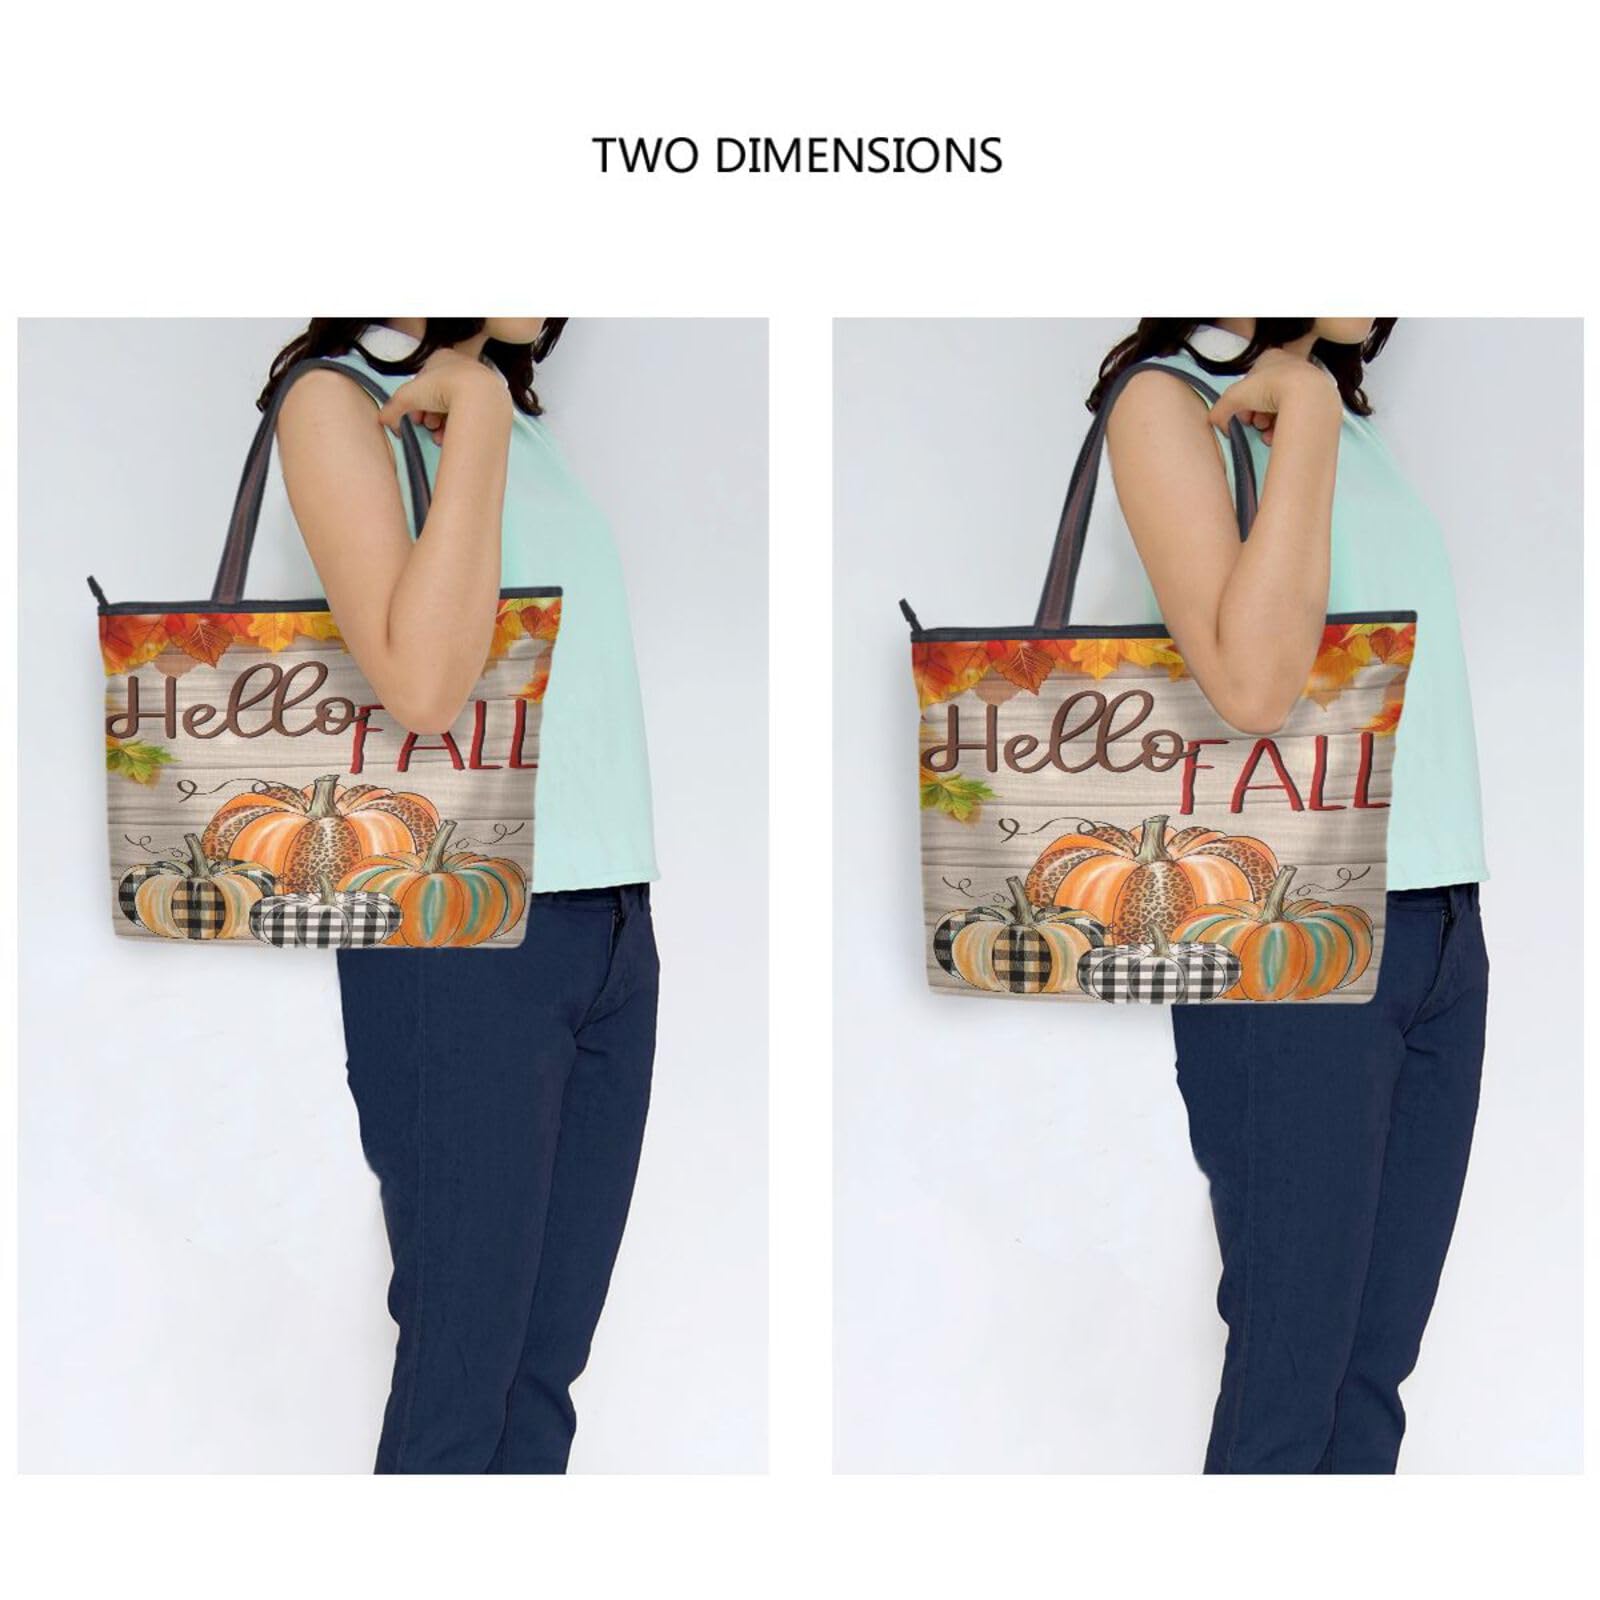 JSTEL Top Handle Purses and Handbags for Women Shoulder Tote Bags